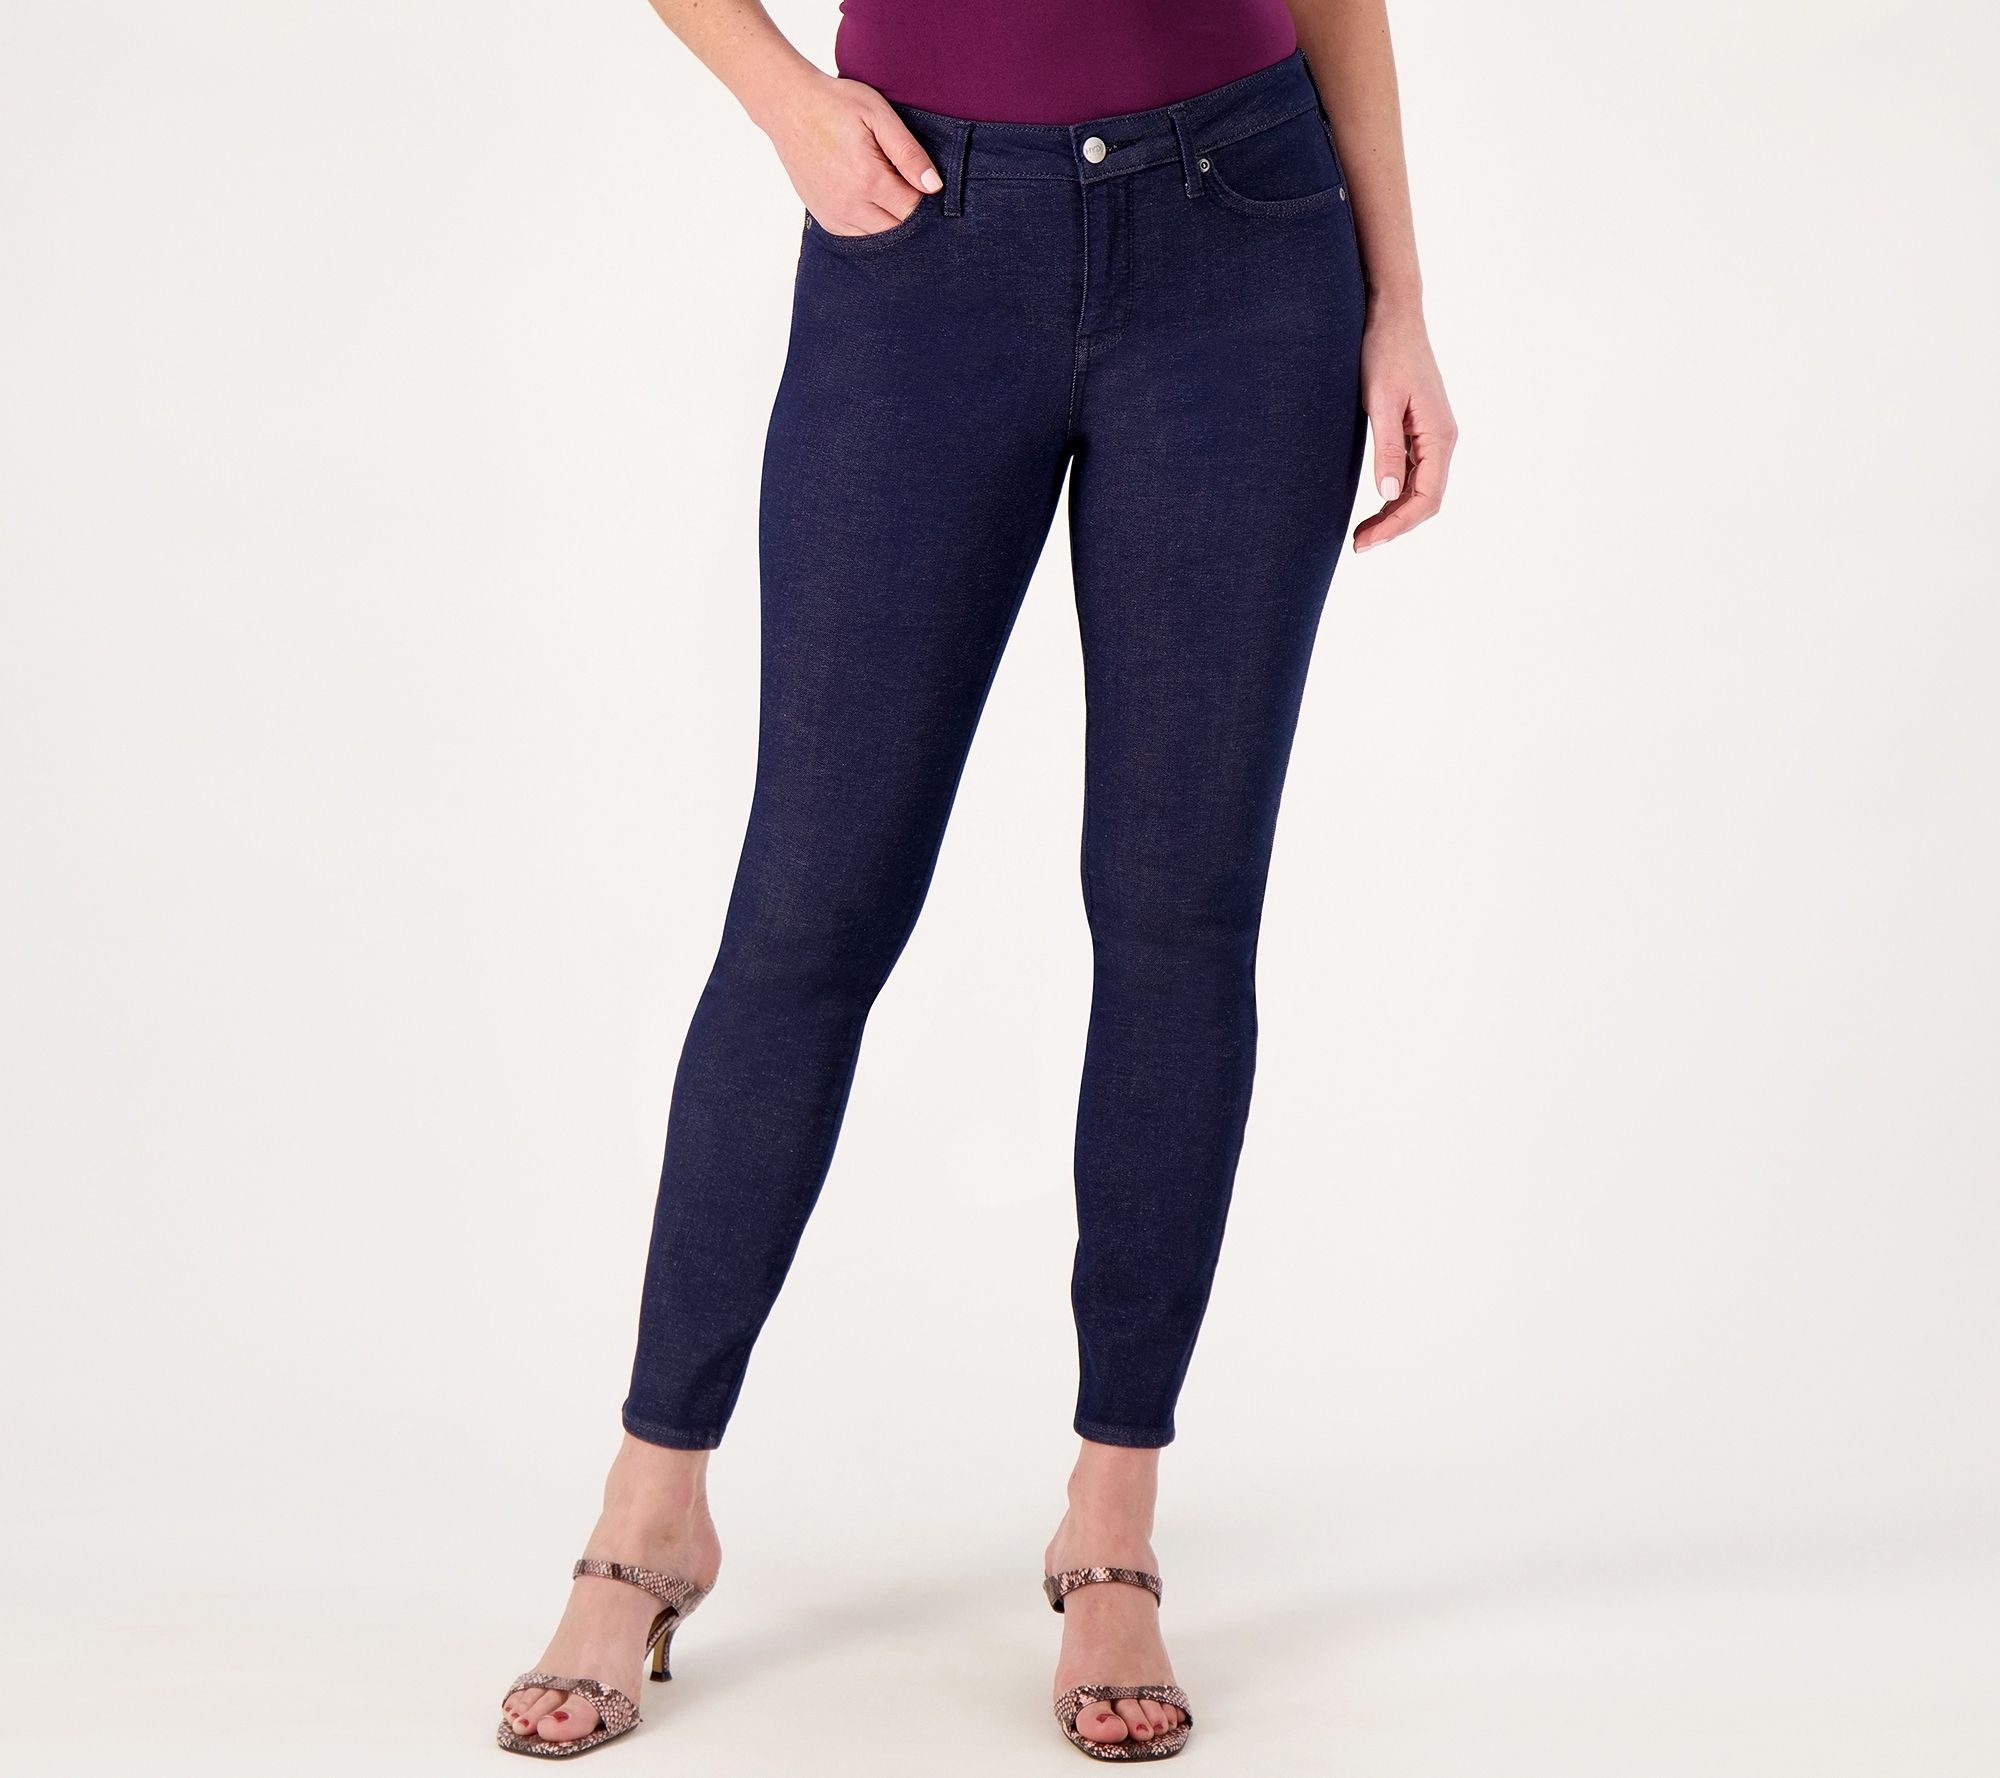 NYDJ Women's Plus Size Ami Skinny Legging Jeans